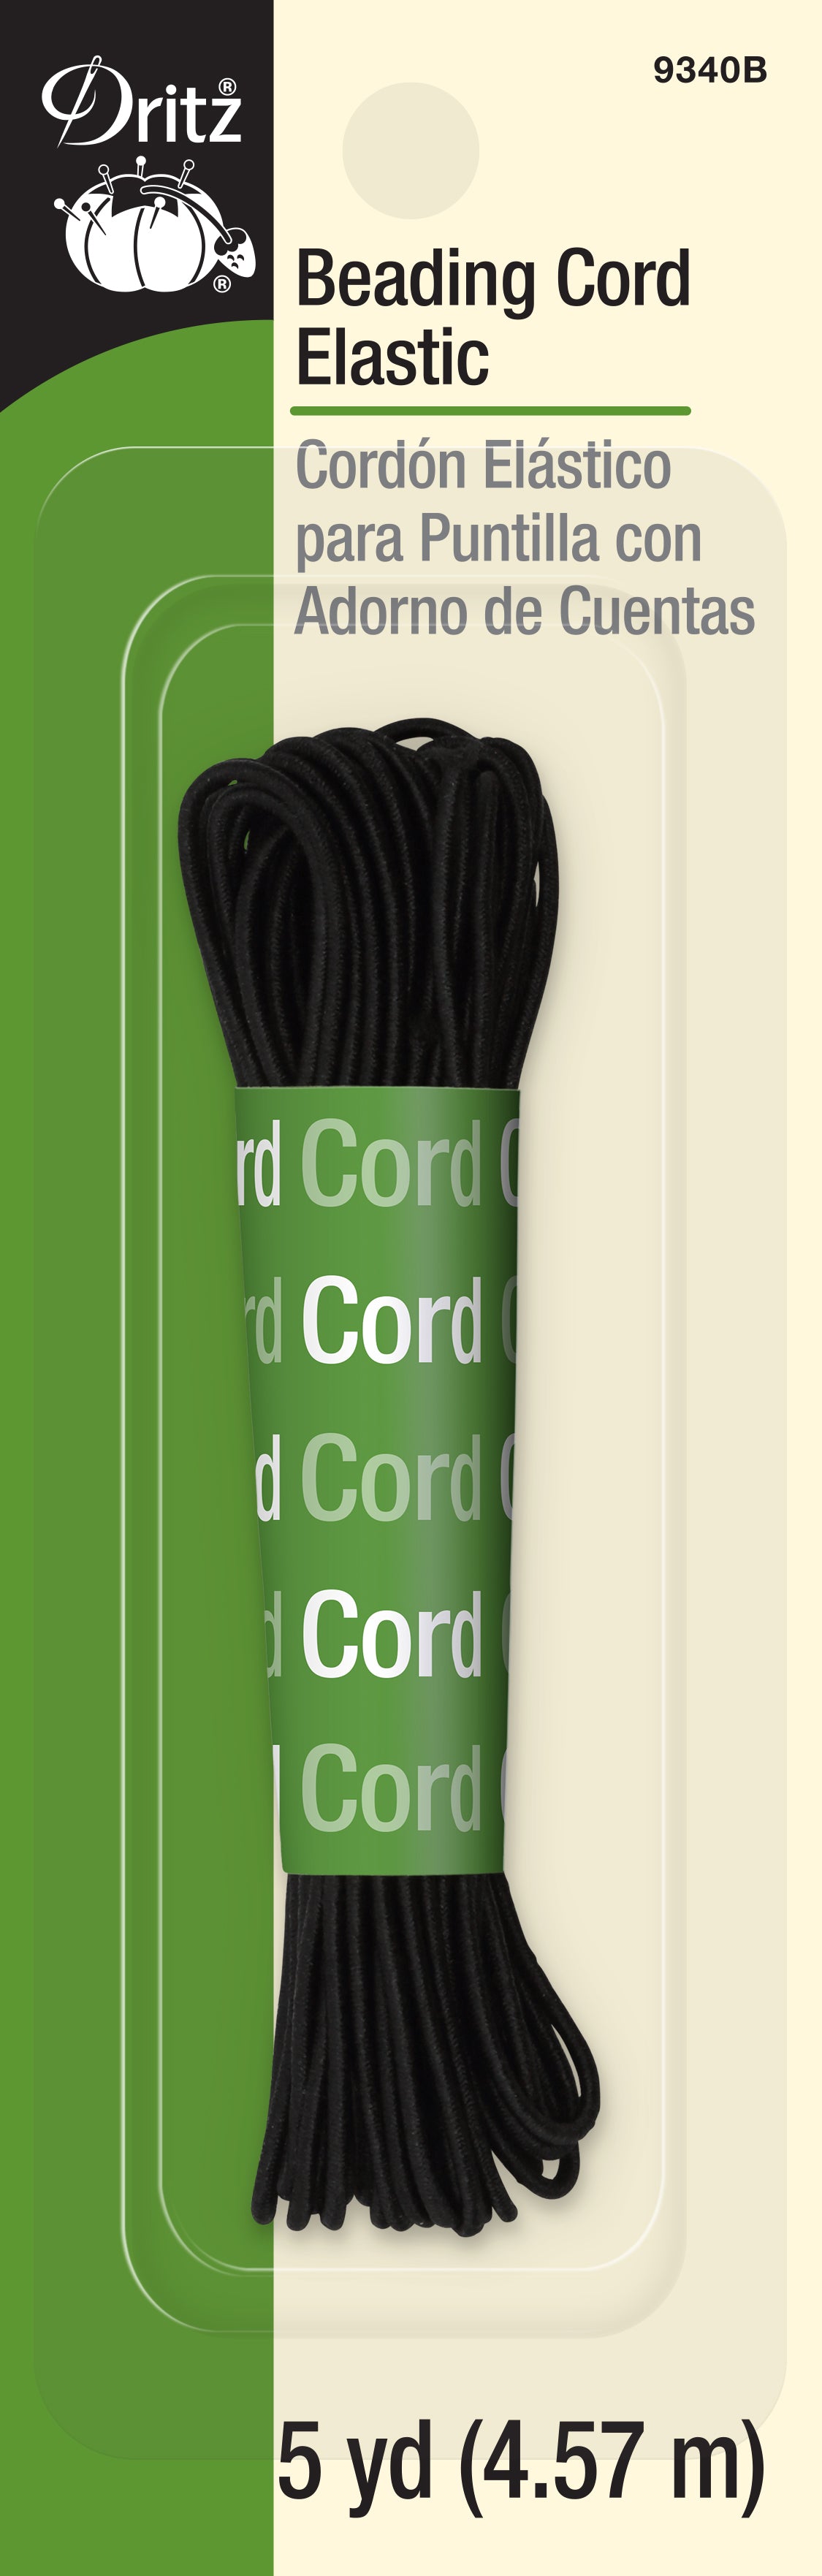 Dritz Black Elastic Beading Cord